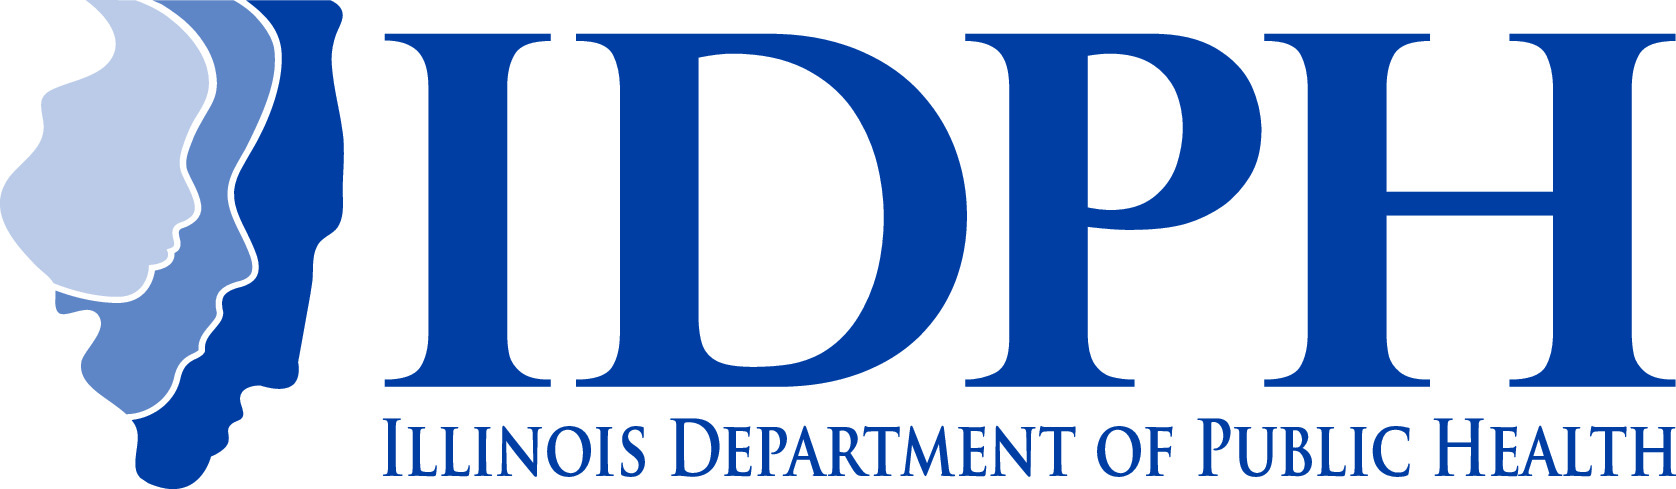 Illinois Department of Public Health logo